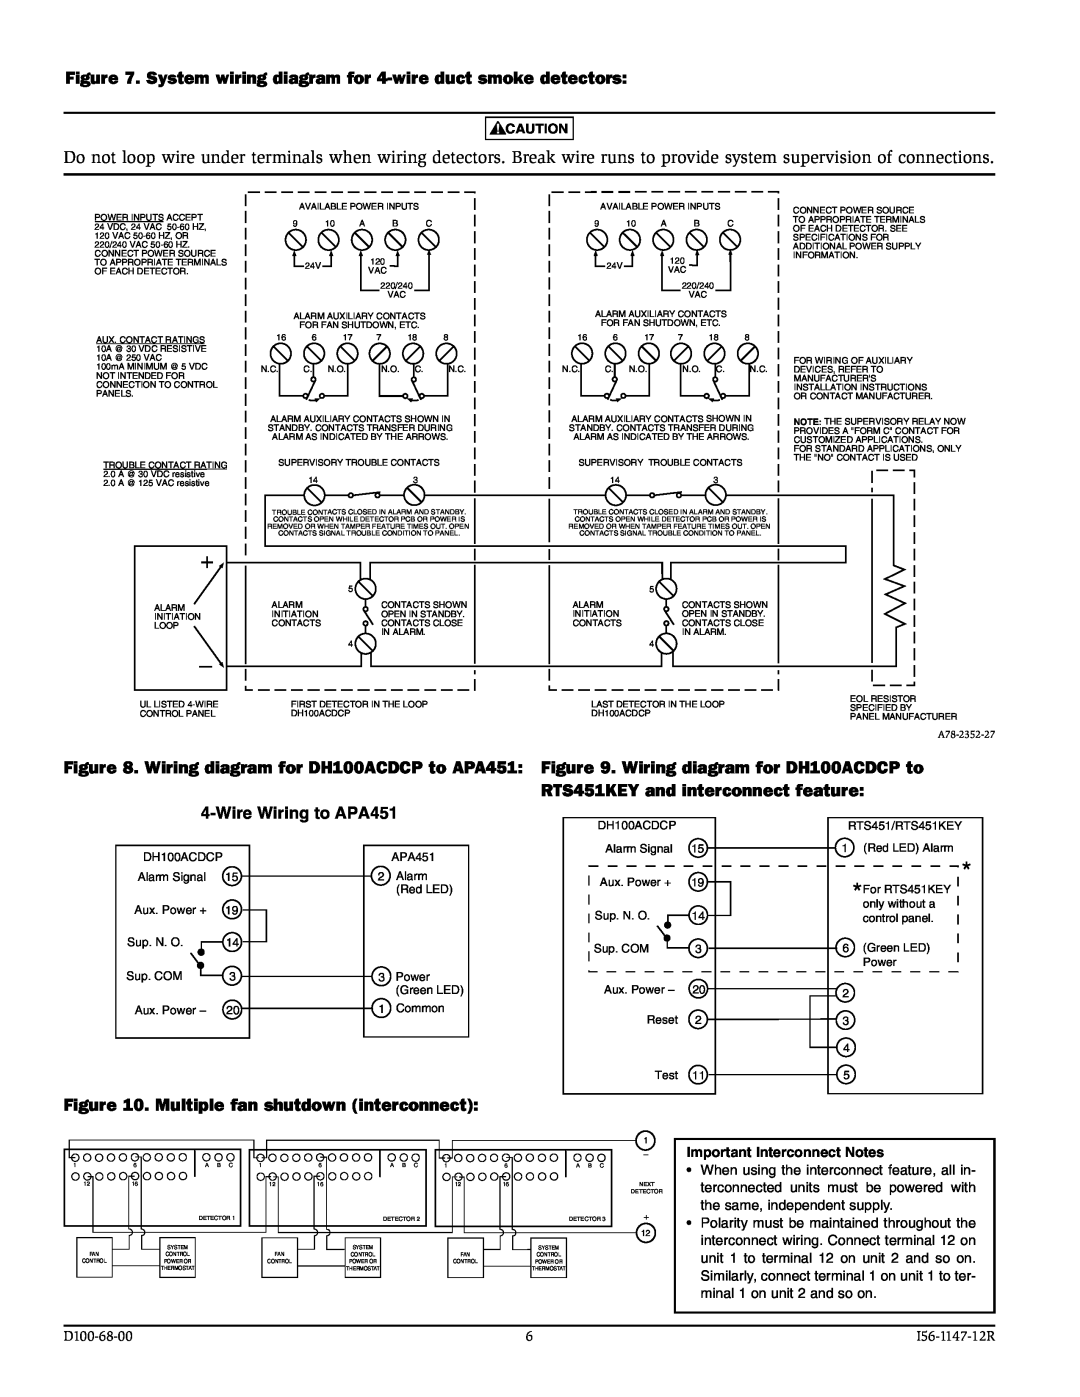 System Sensor Multiple fan shutdown interconnect, WireWiring to APA451, Wiring diagram for DH100ACDCP to APA451 